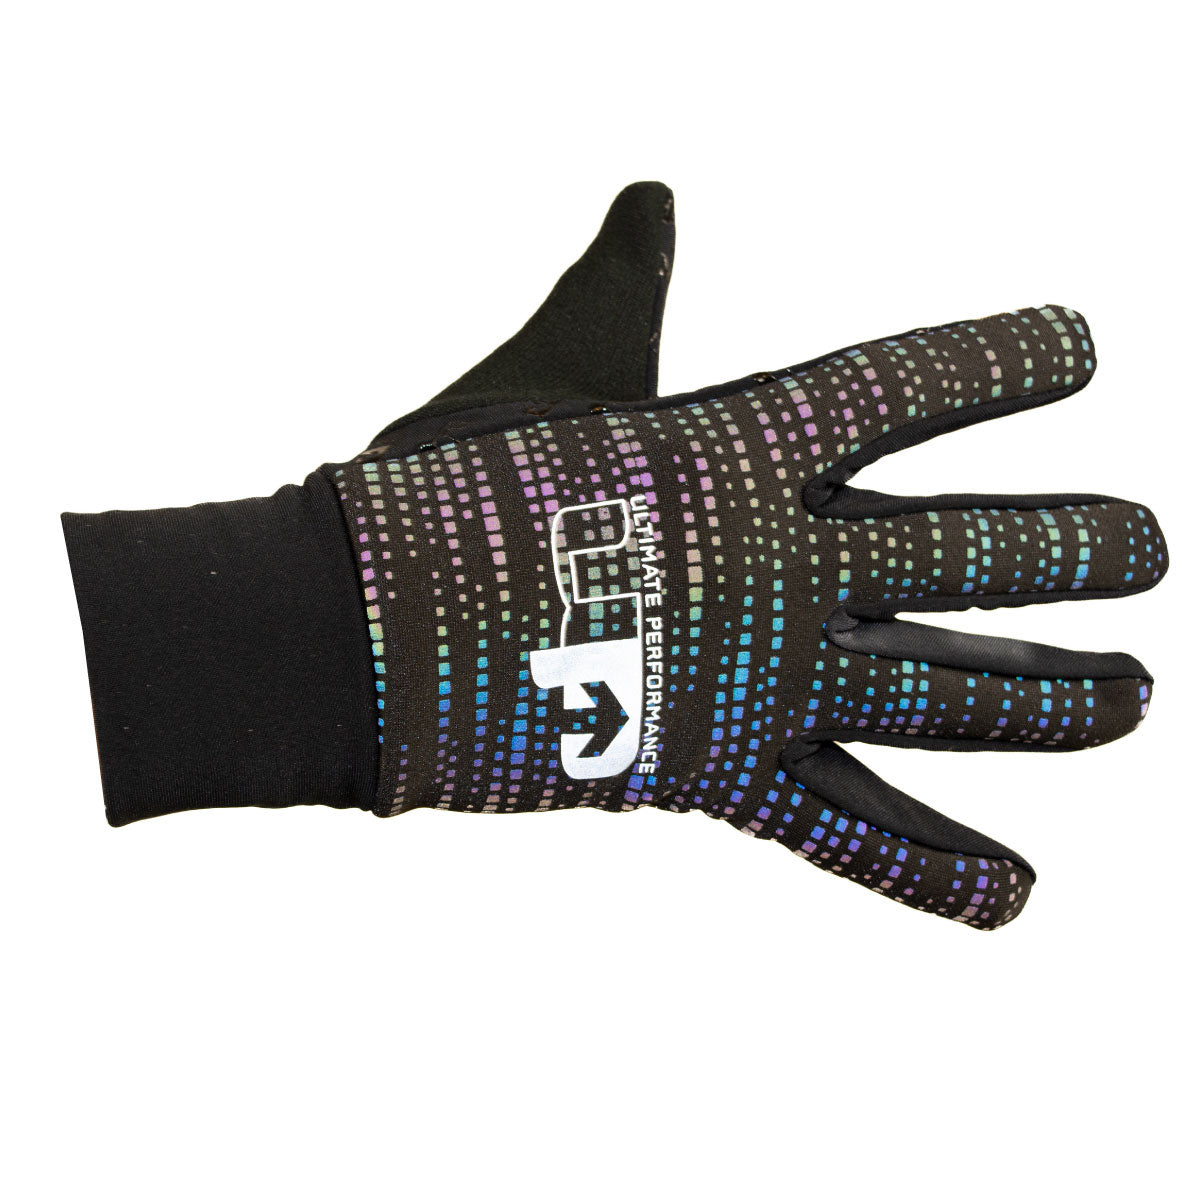 Ultimate Performance Reflective Gloves - Adult - Black/Reflective